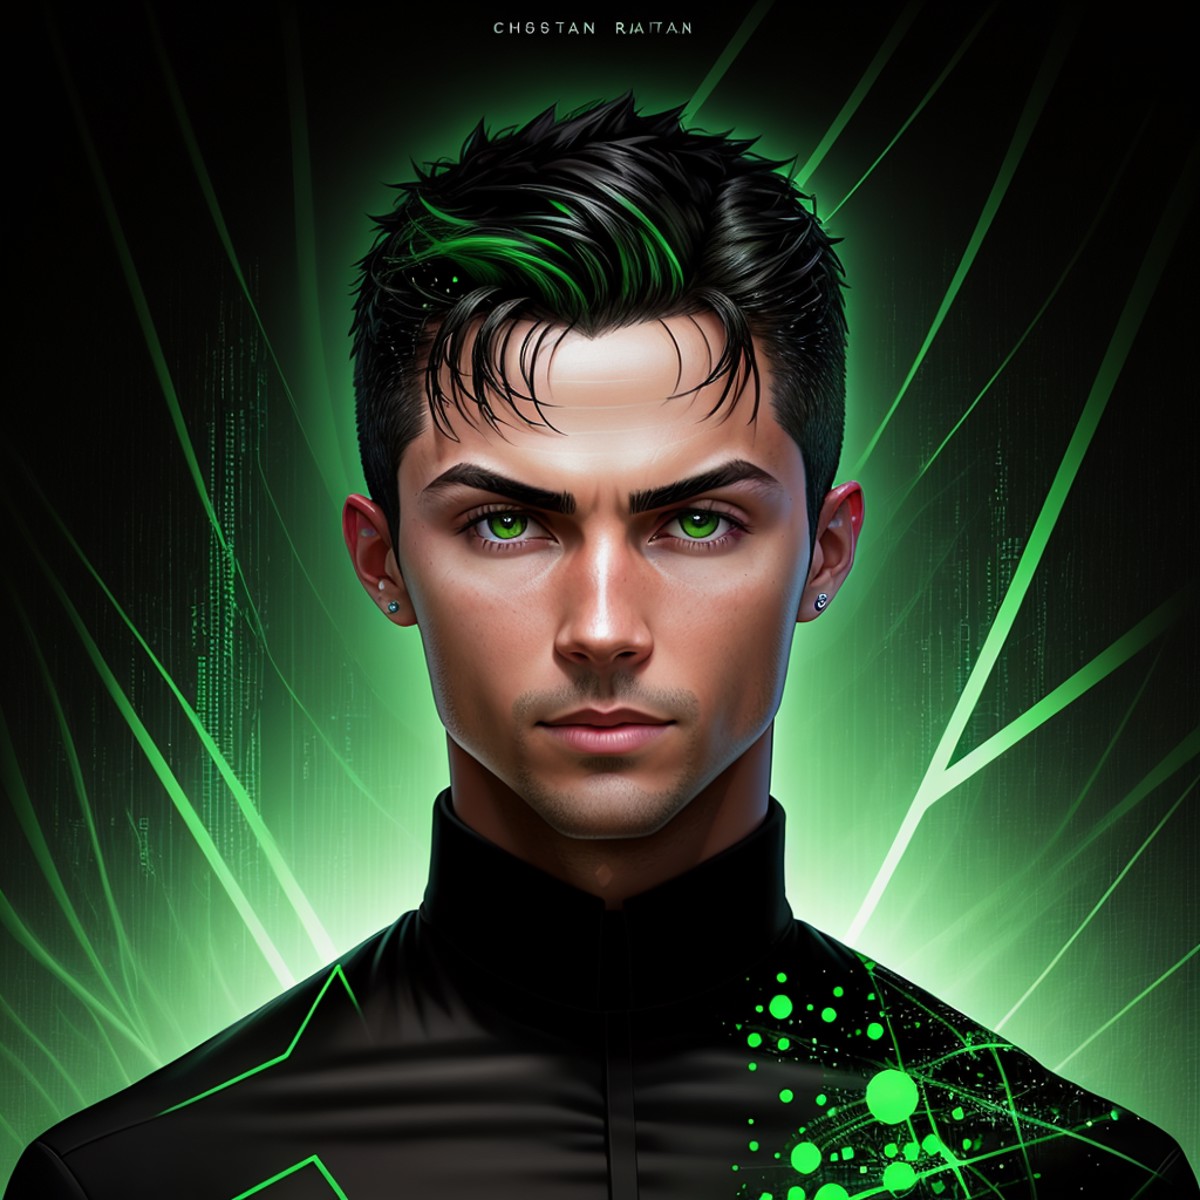 Photo portrait of Cristiano Ronaldo, world from digital symbols, black and green colors, matrix style